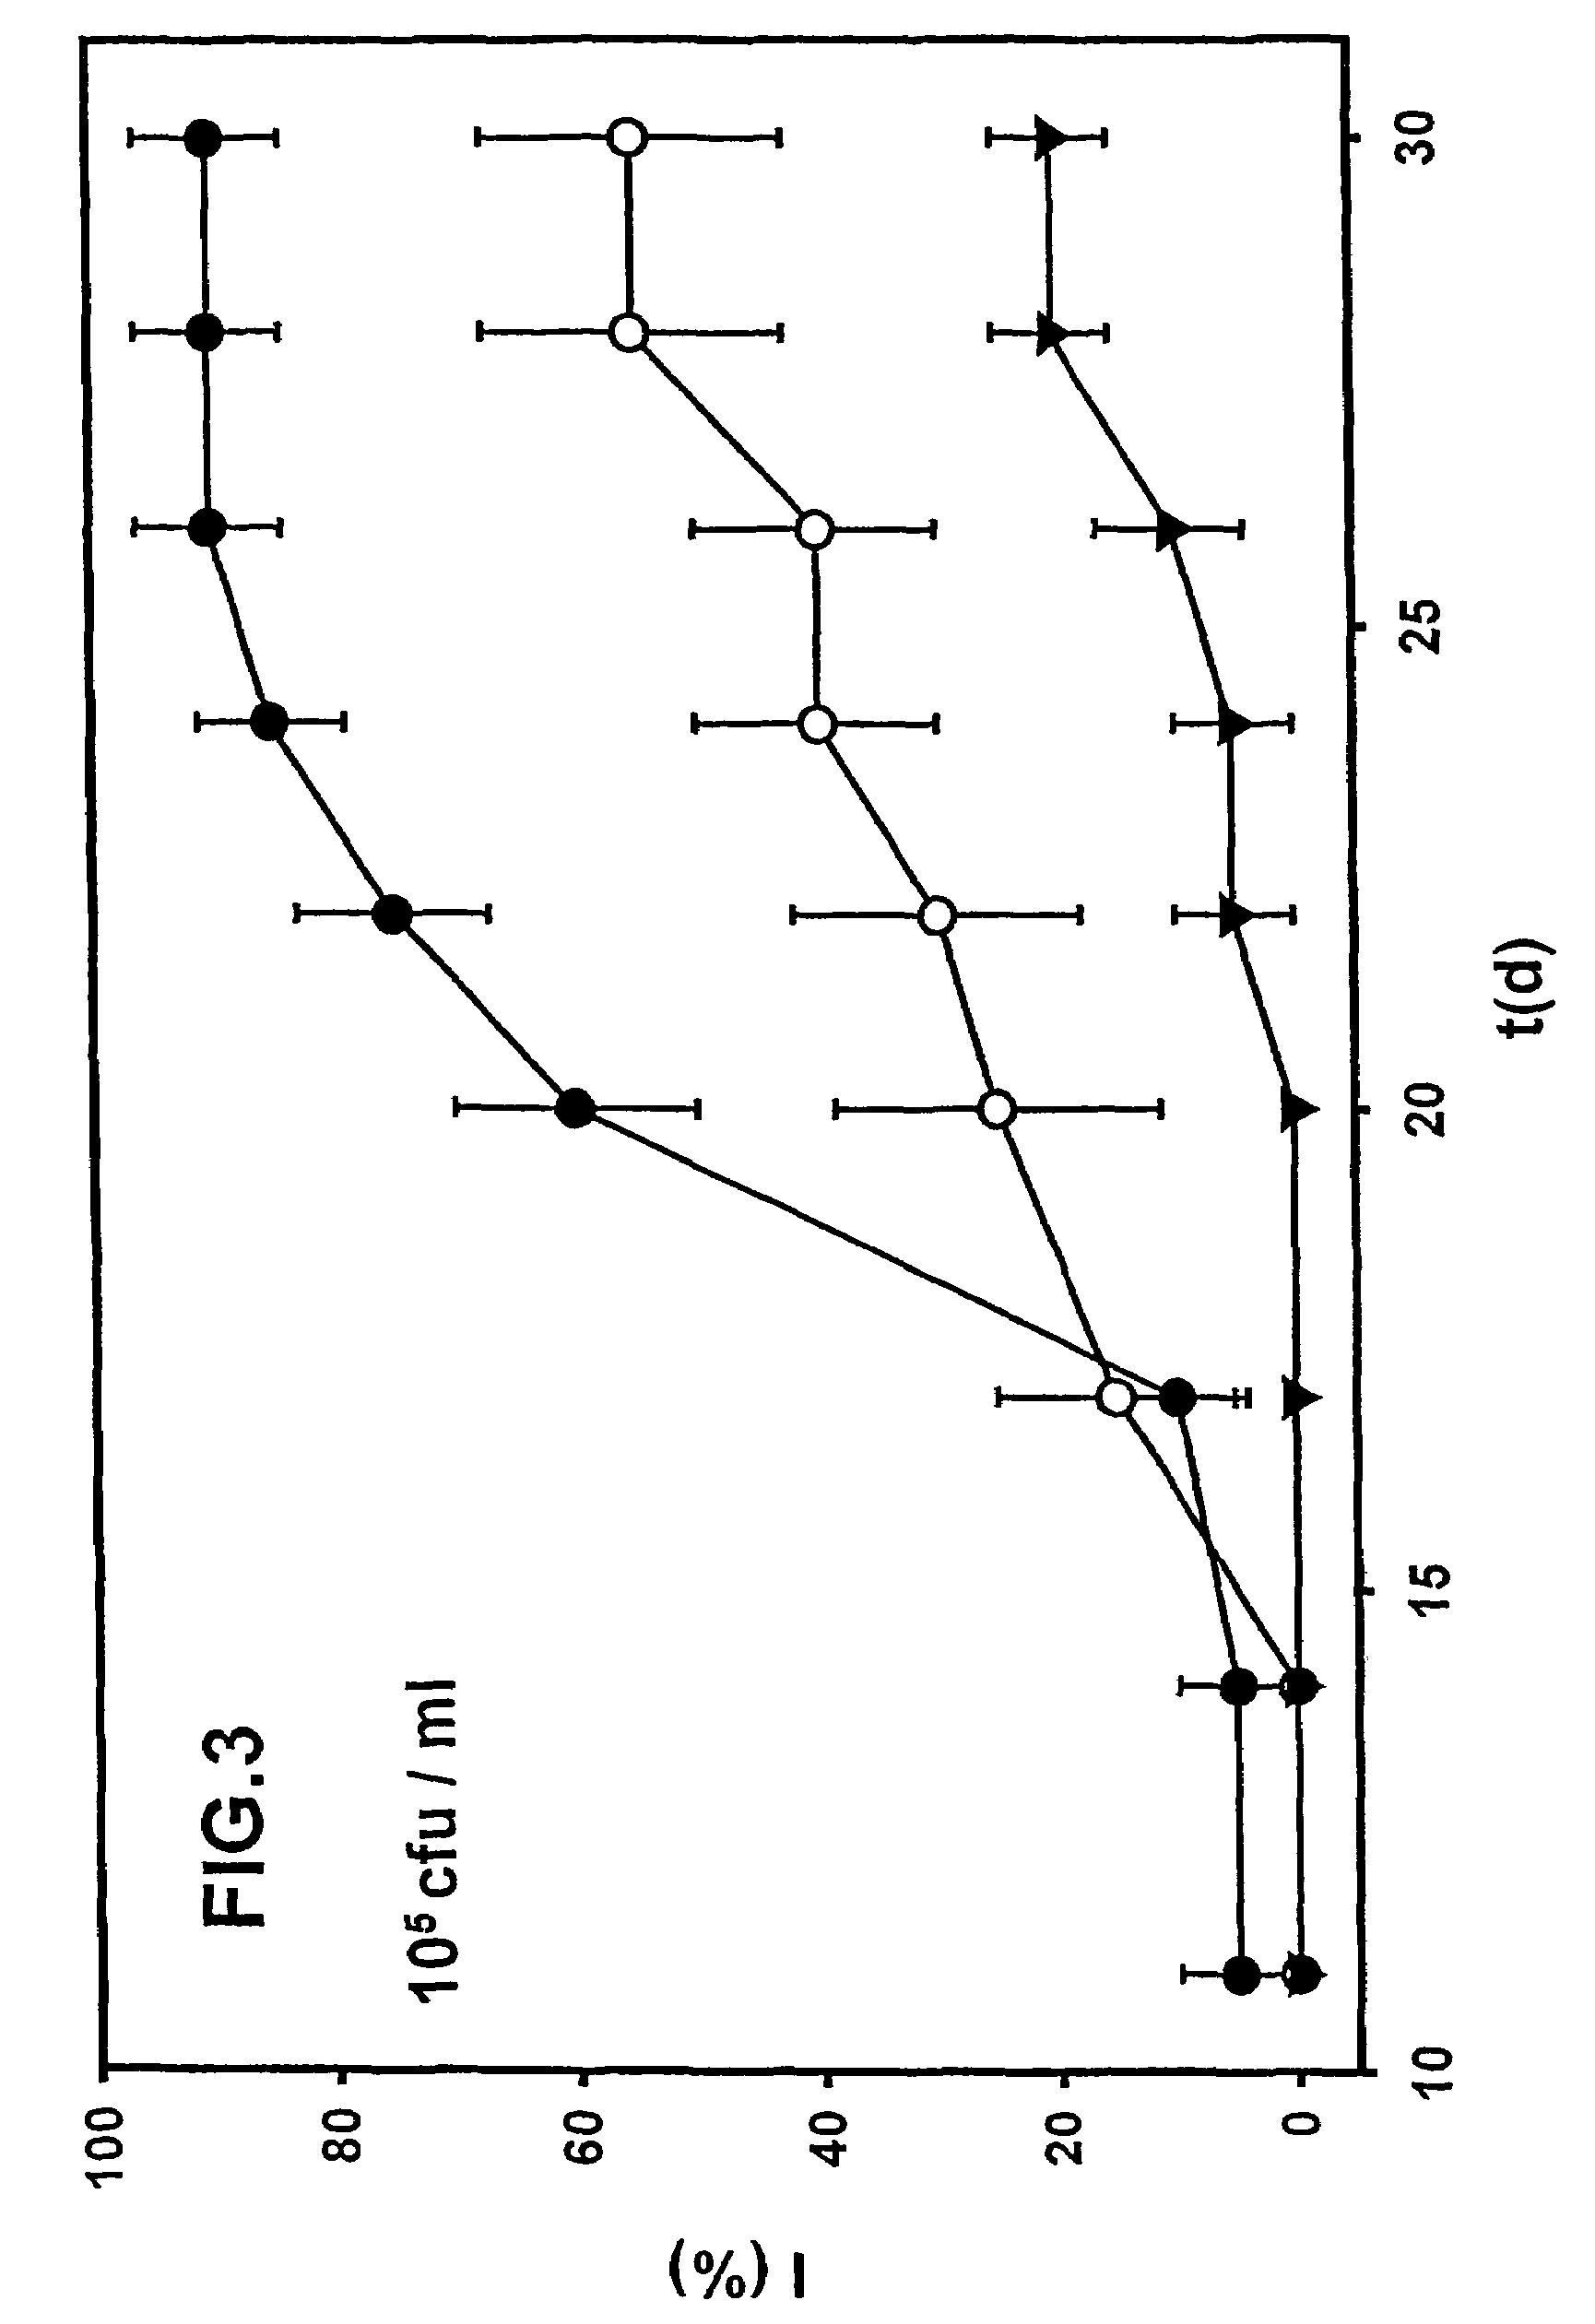 Substrates containing a Trichoderma asperellum strain for biological control of Fusarium and Rhizoctonia